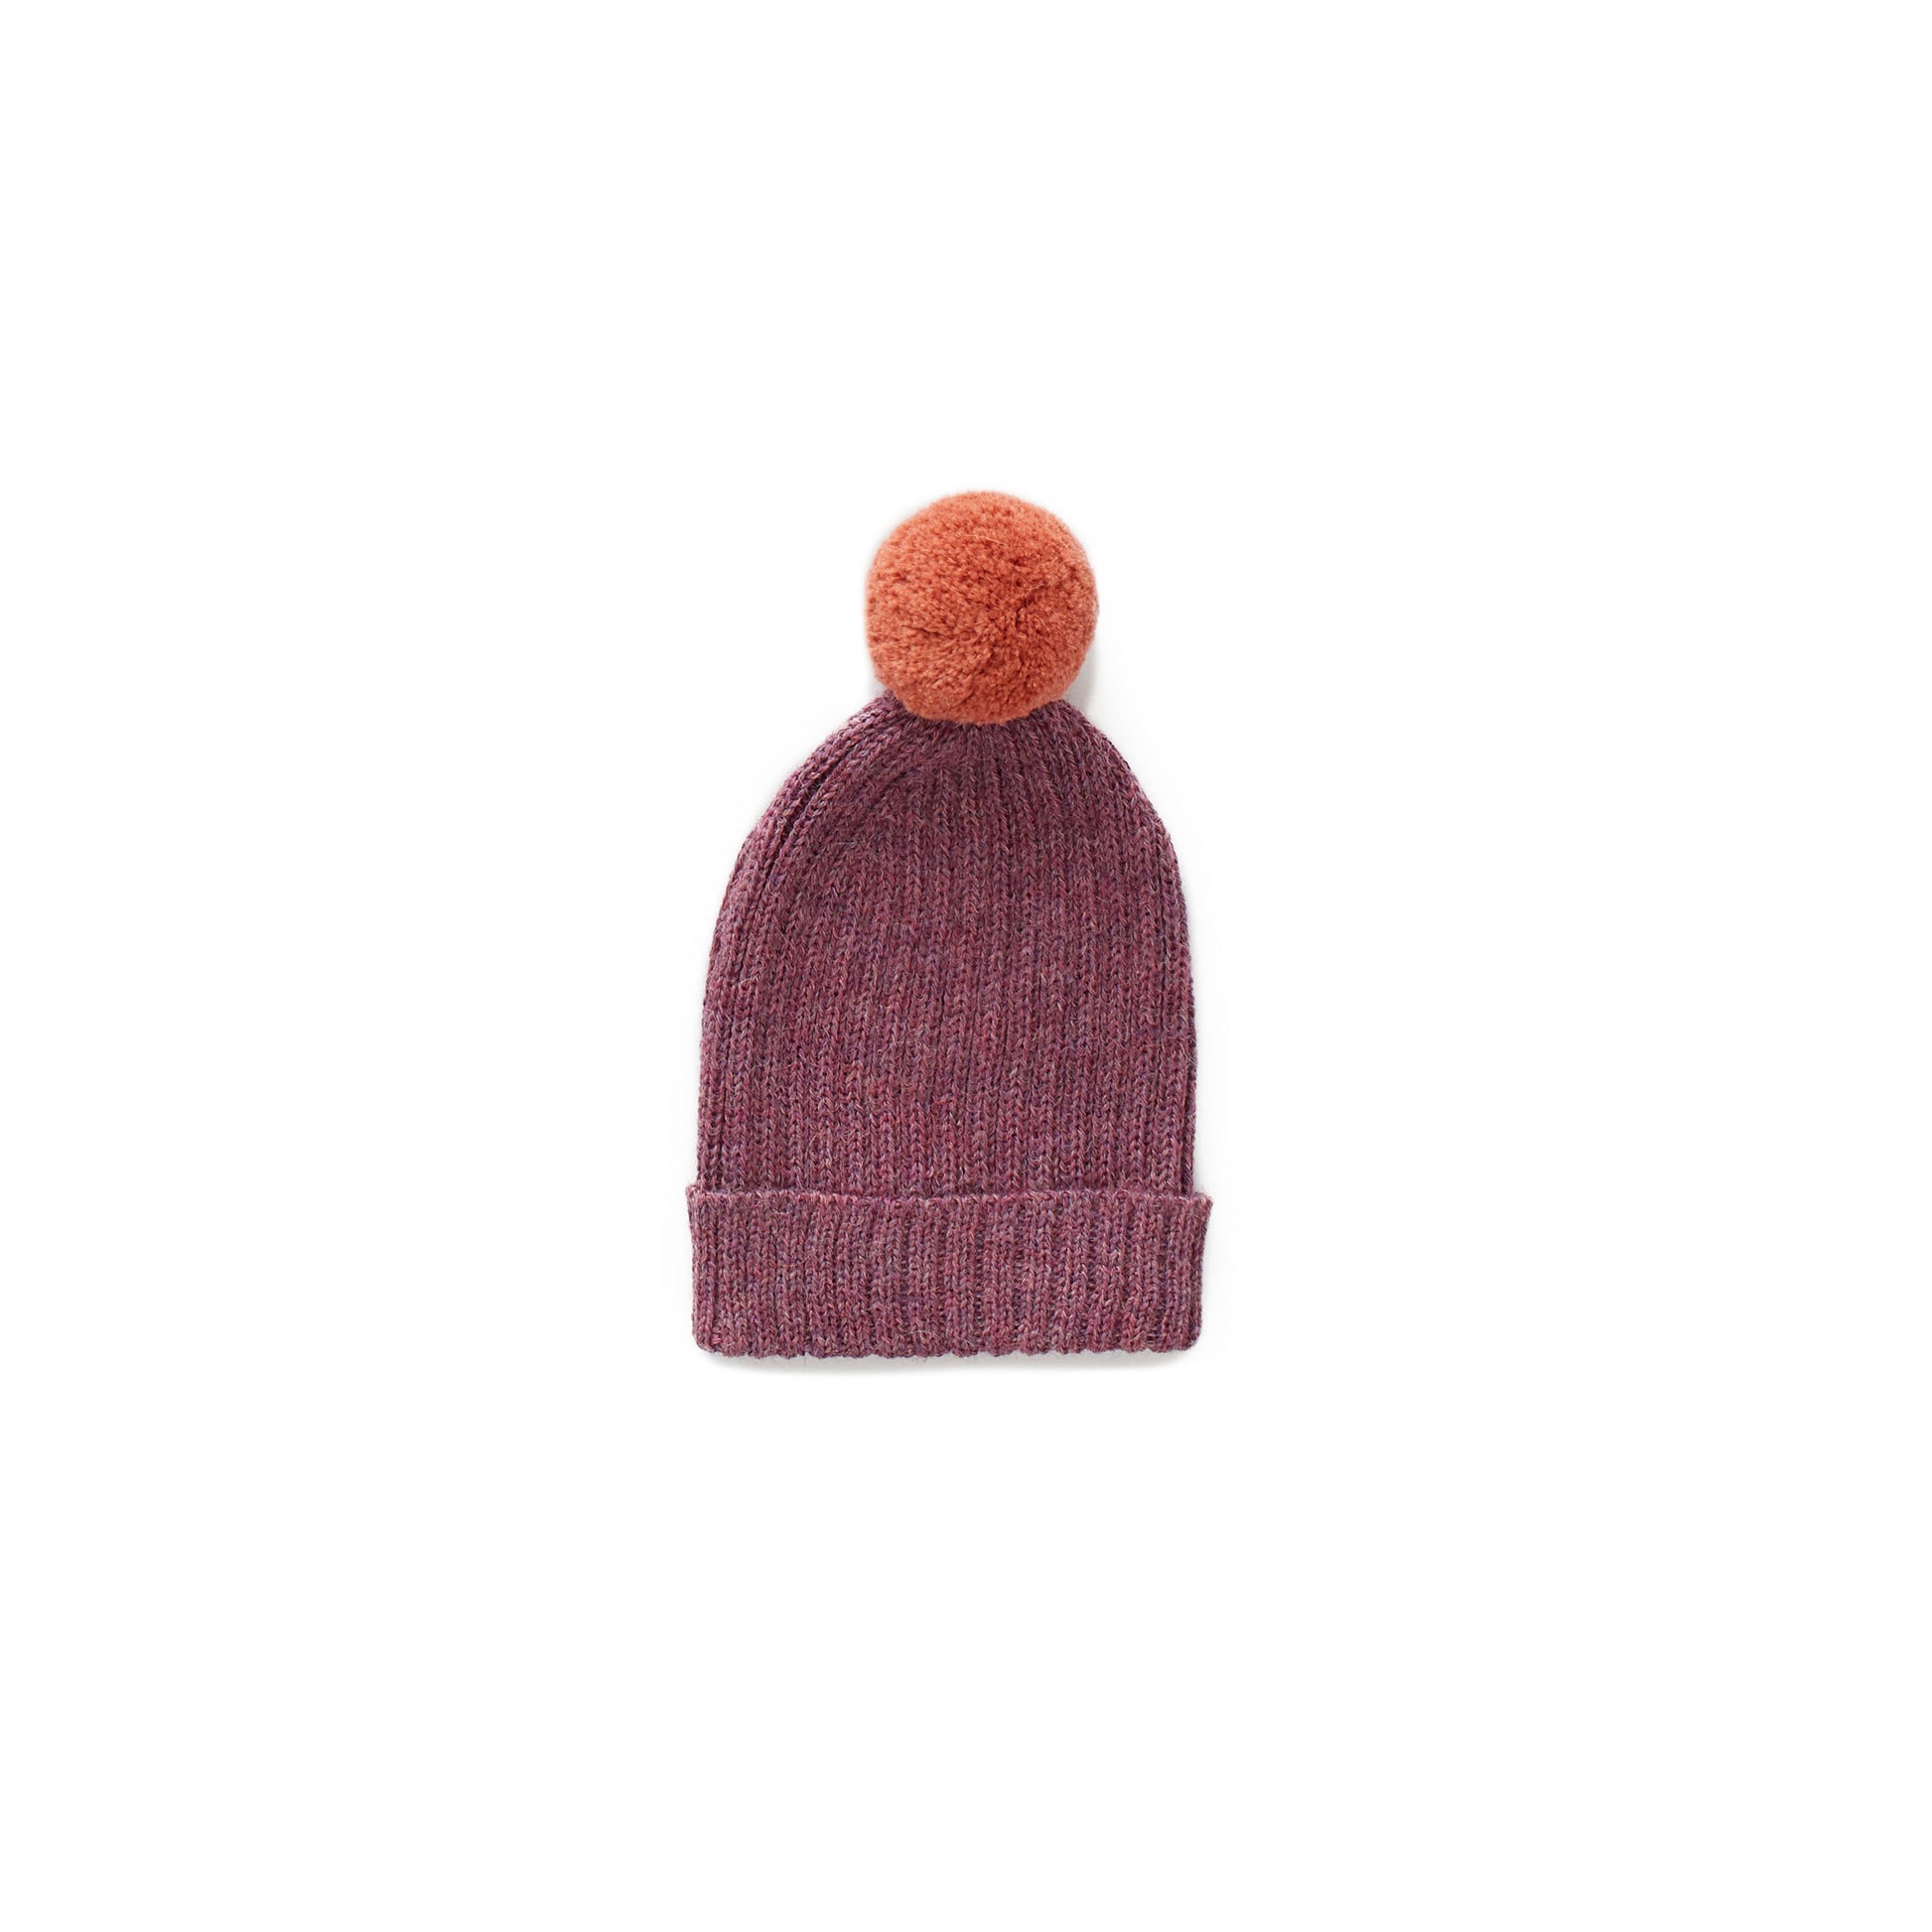 Oeuf Kids accessories Pom Pom Hats-Mauve/Apricot - Ever Simplicity